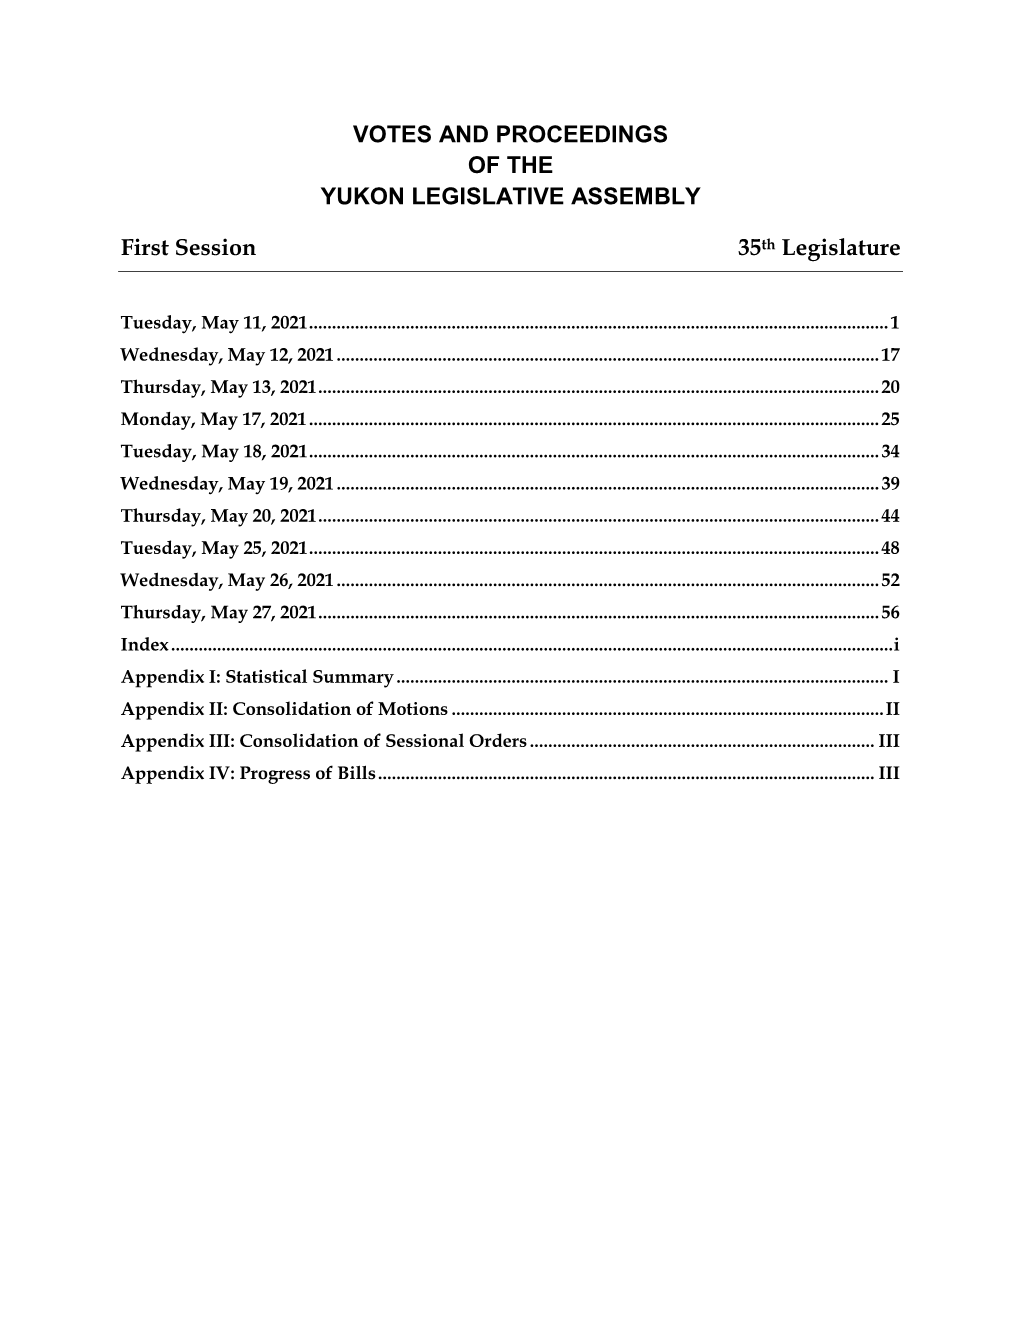 Votes and Proceedings of the Yukon Legislative Assembly